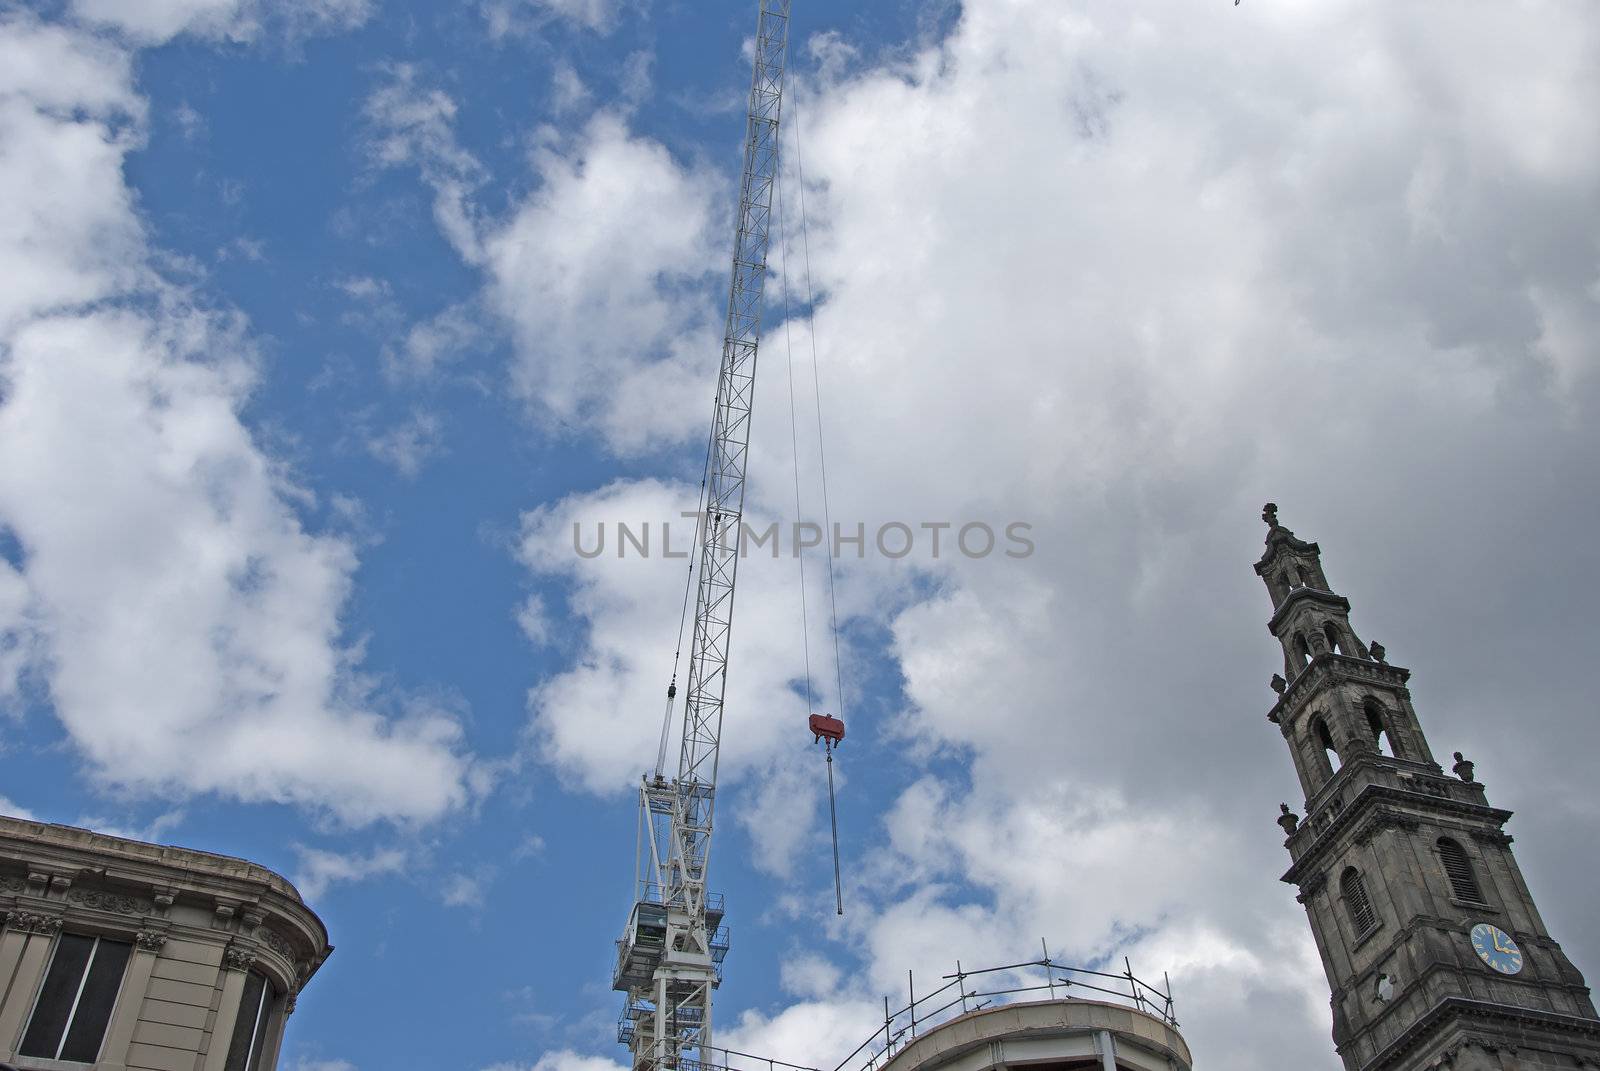 A Nineteenth Century Clocktower and a white crane against a blue sky